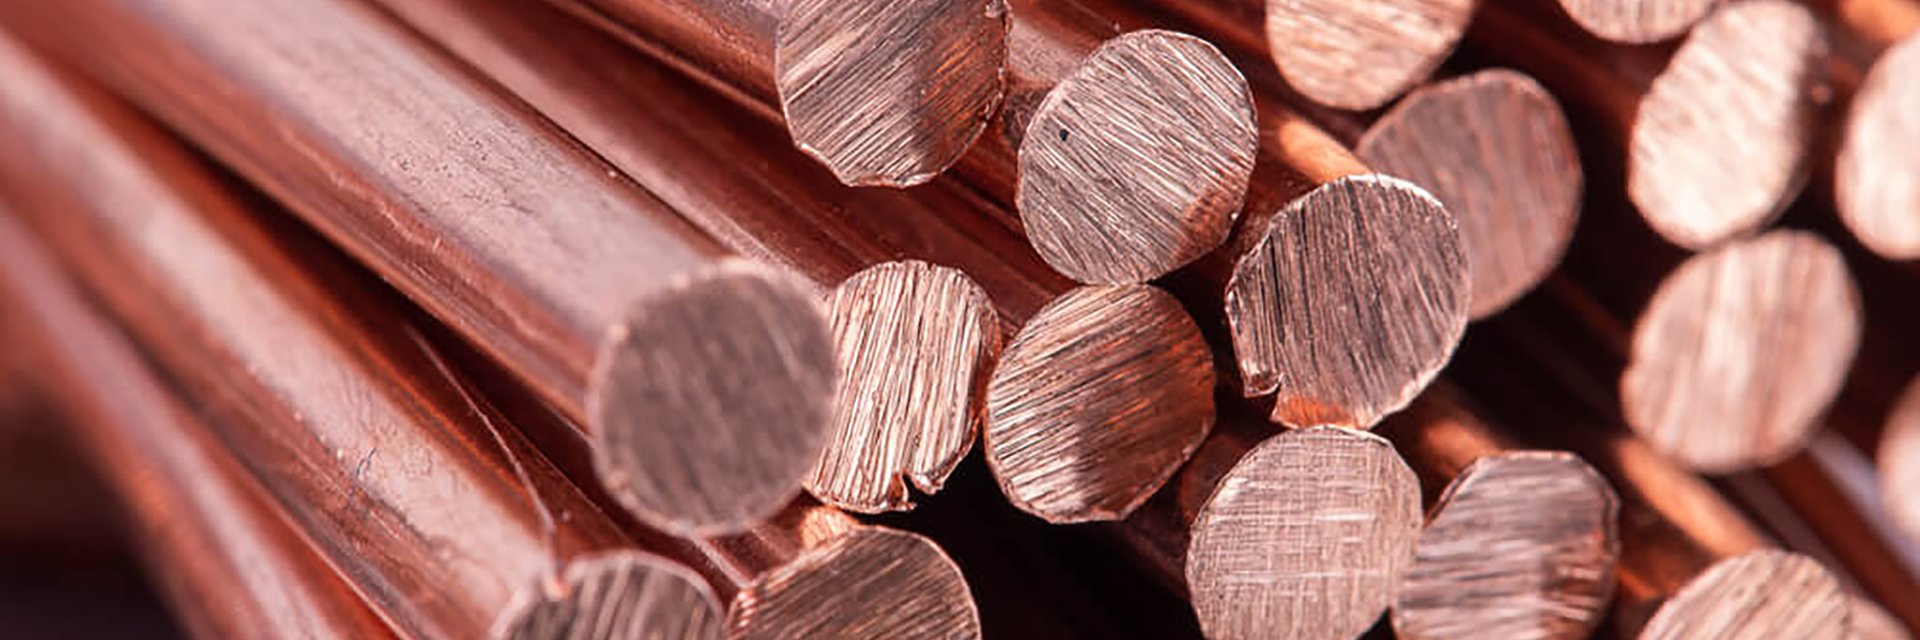 most-common-uses-for-beryllium-copper